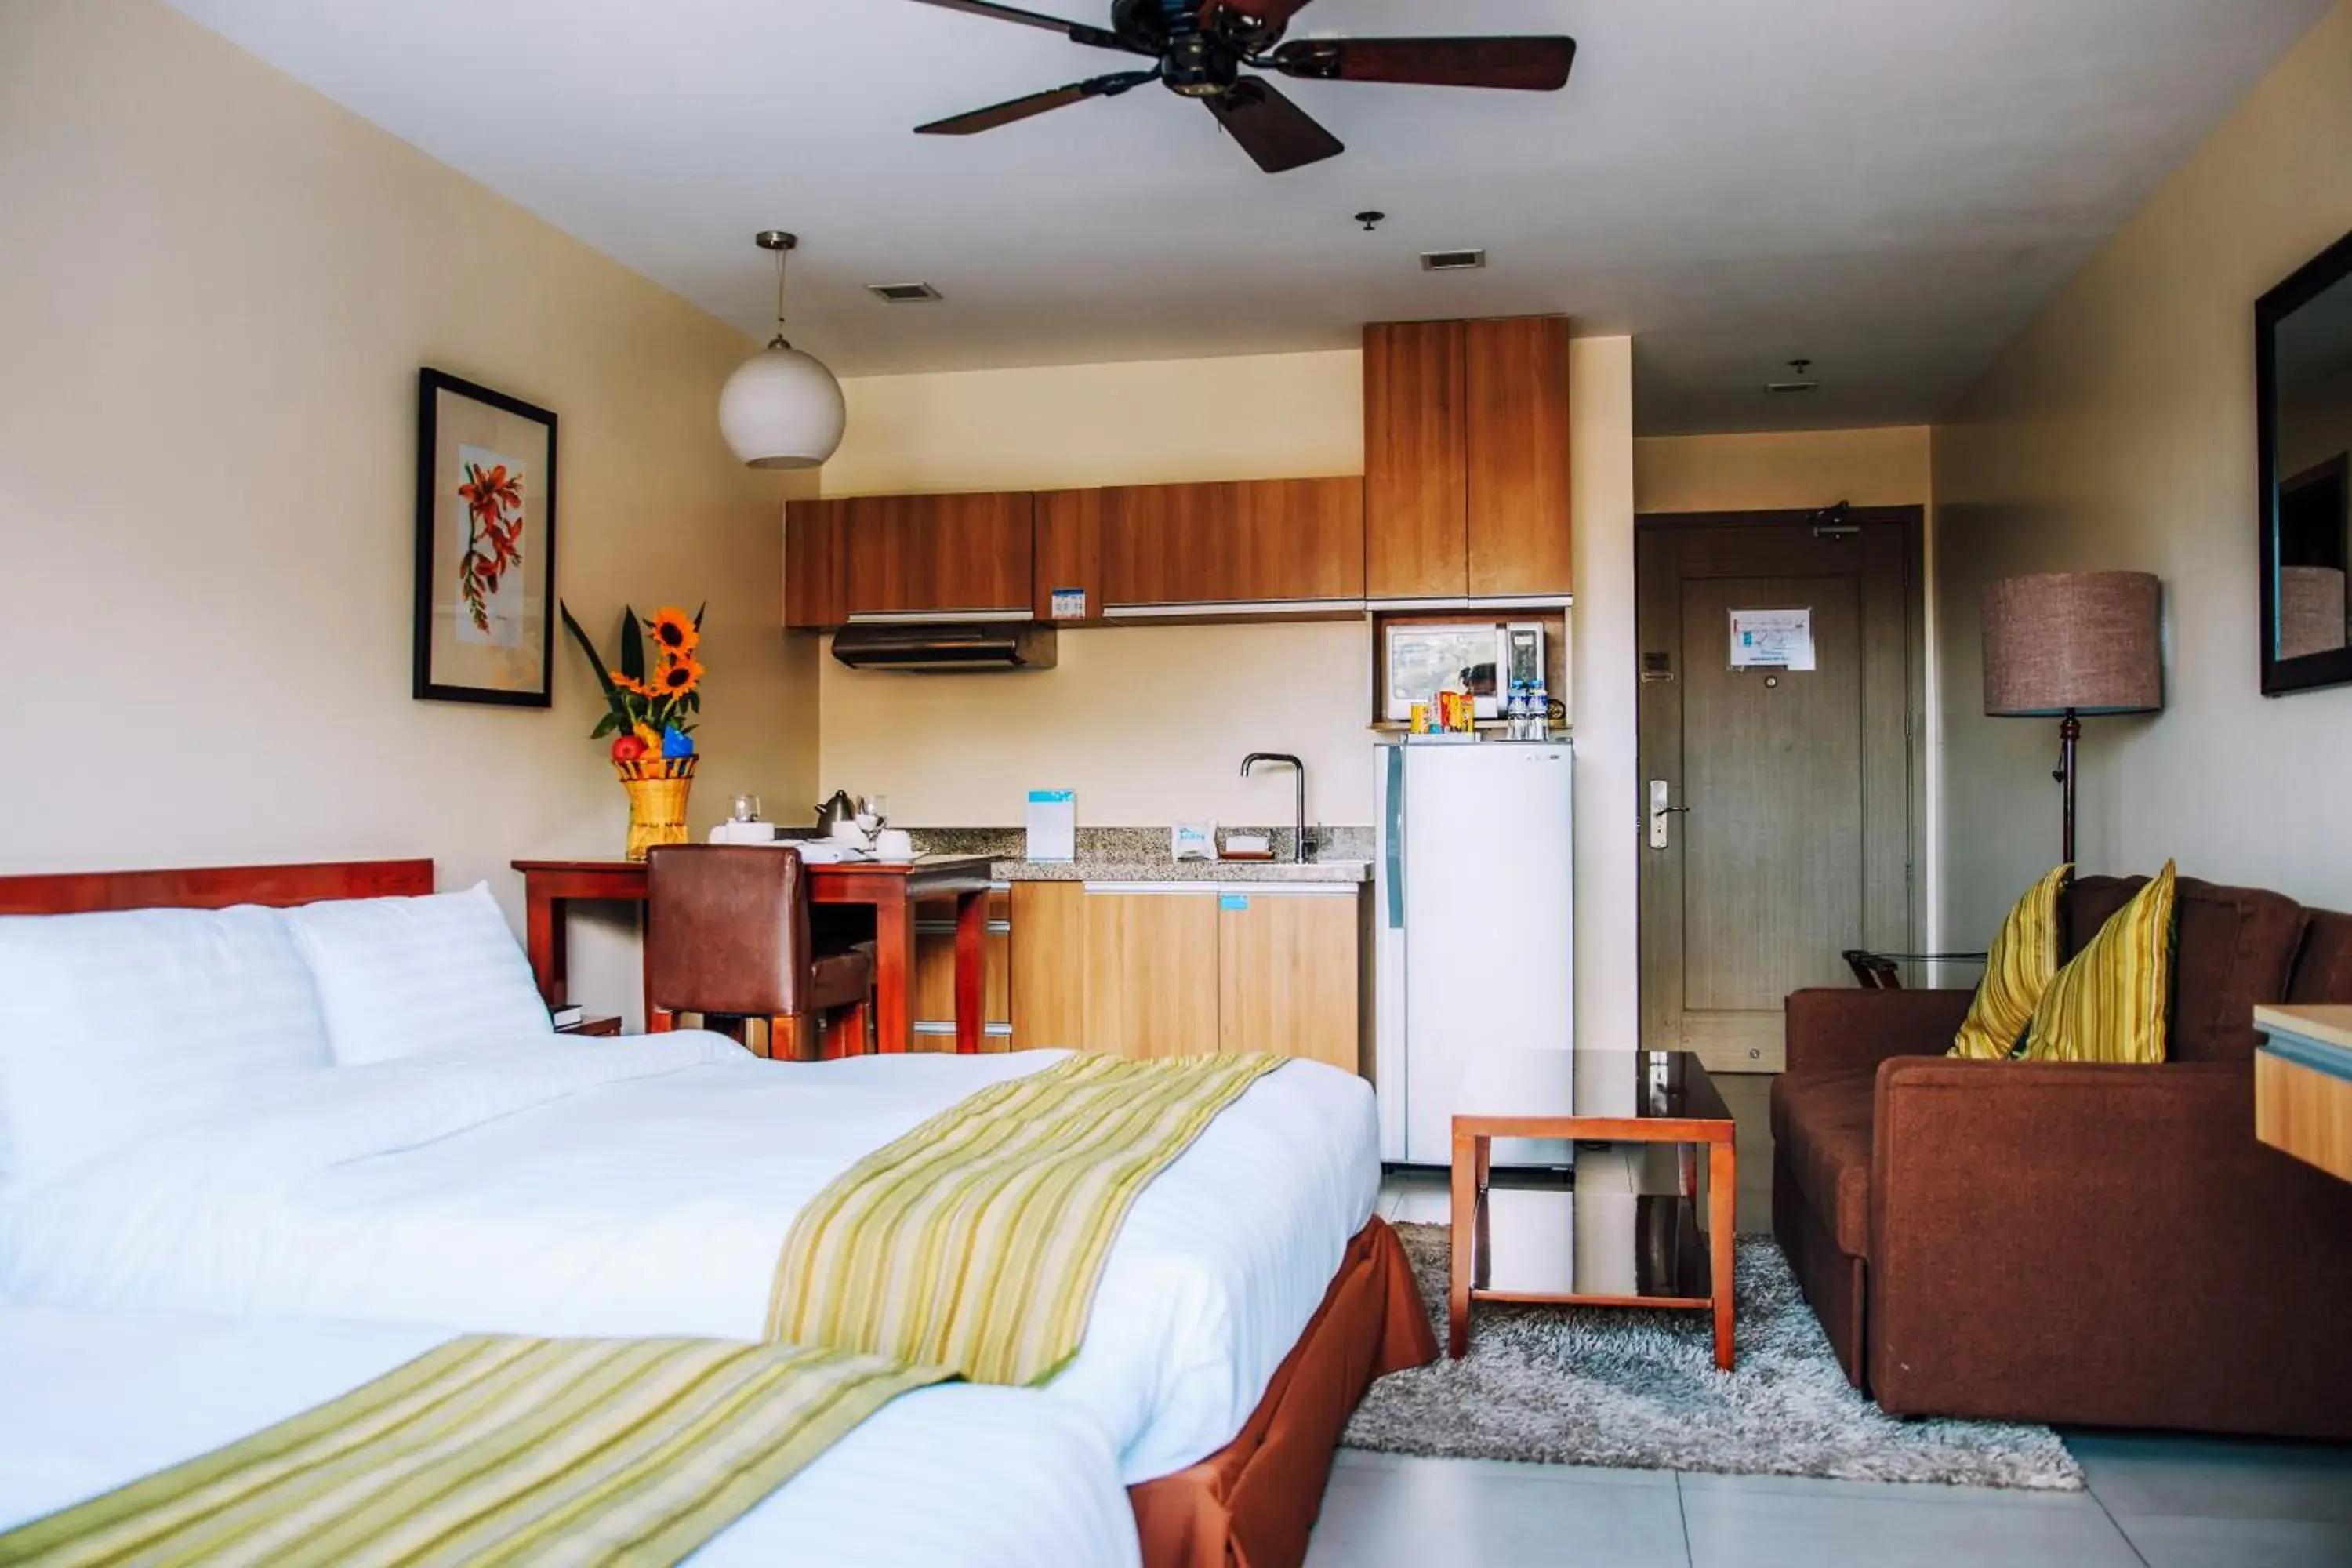 Bed in Azalea Hotels & Residences Baguio